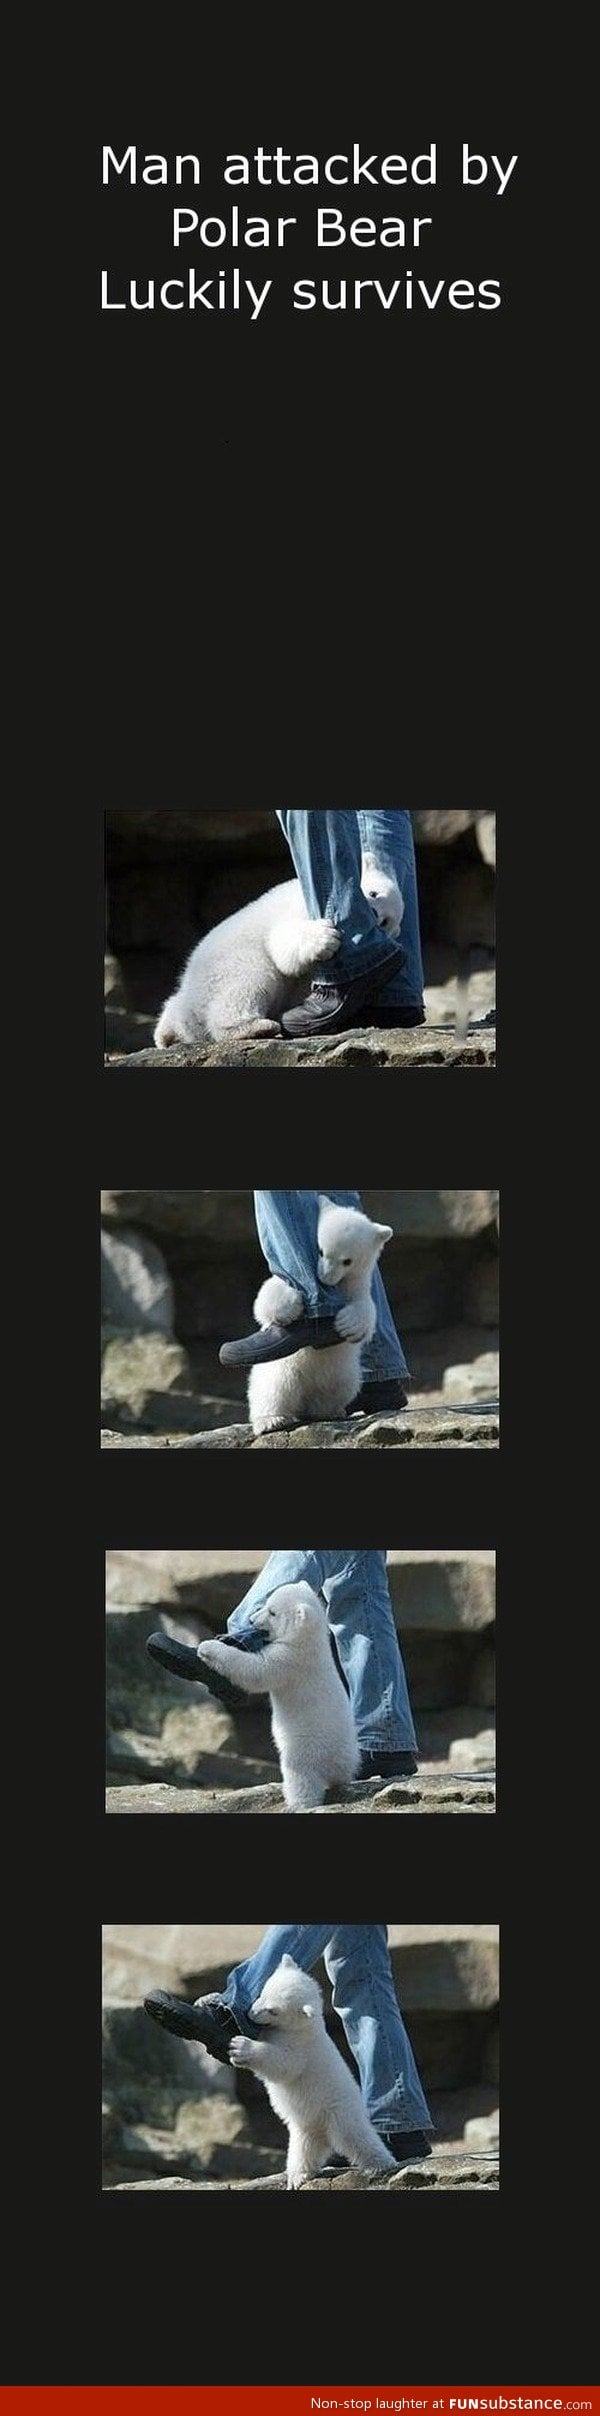 Man attacked by polar bear survives